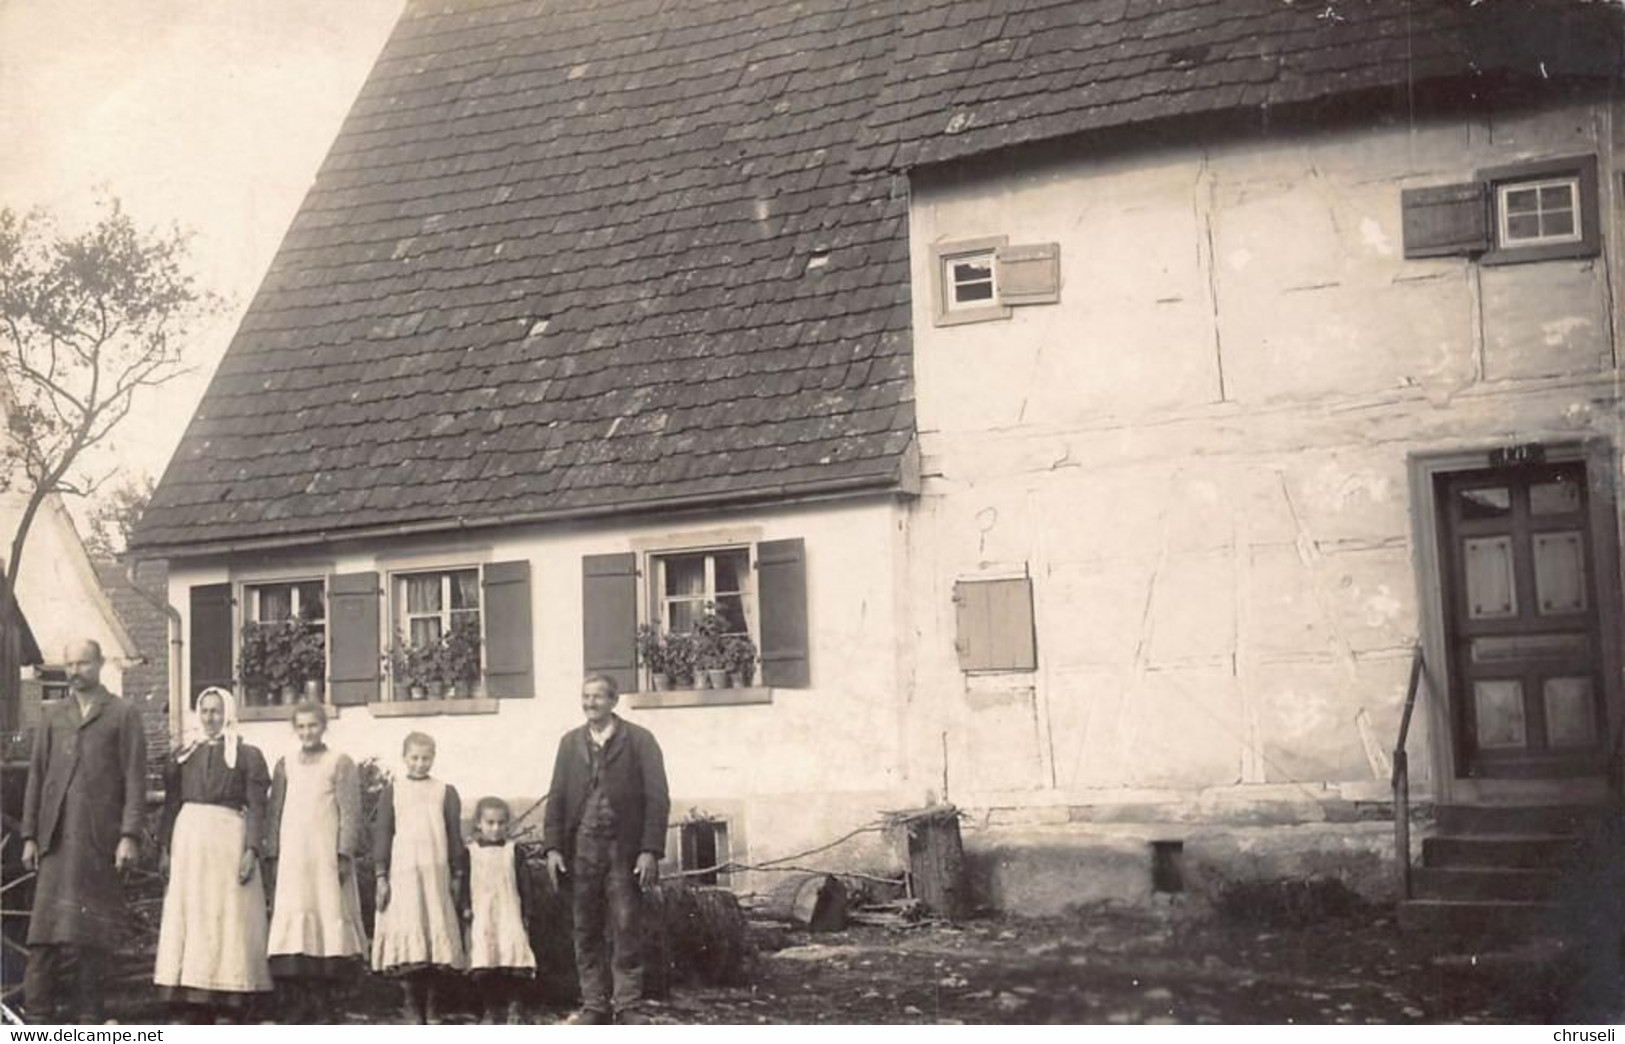 Hauptwil Wohnhaus Um 1910 - Hauptwil